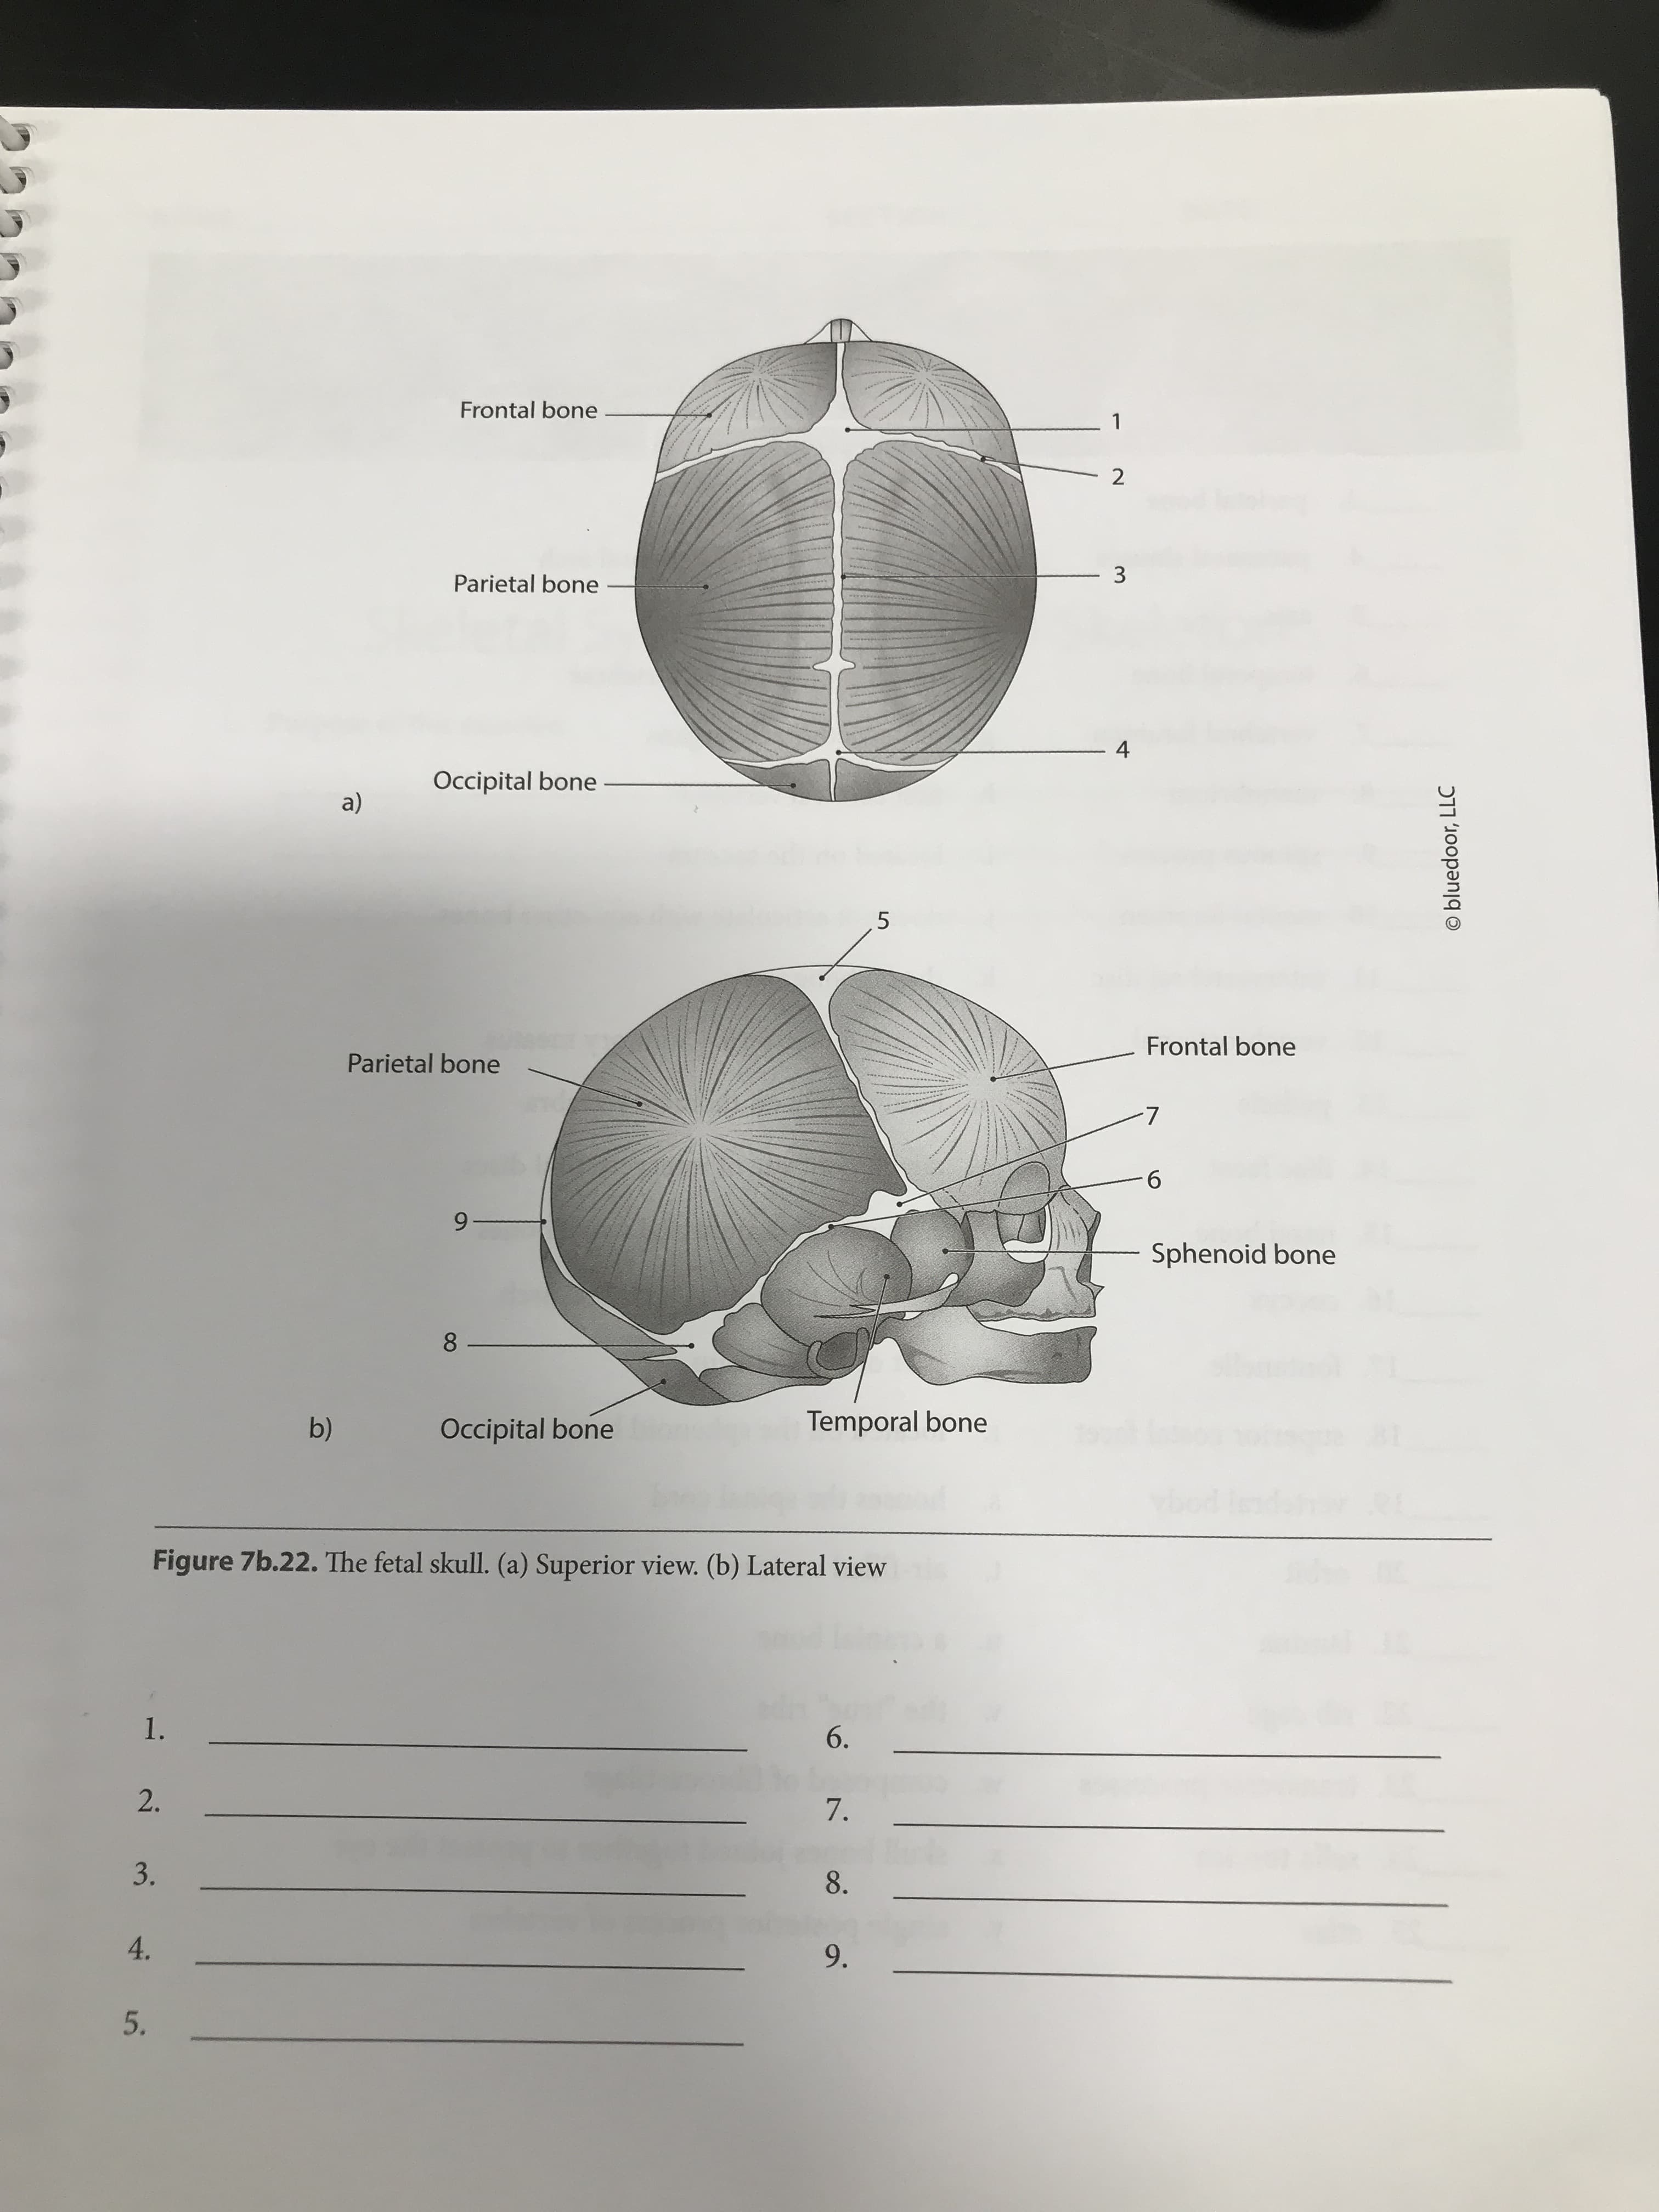 Frontal bone
2
Parietal bone
4
Occipital bone
a)
Frontal bone
Parietal bone
7.
б
9-
Sphenoid bone
8.
b)
Occipital bone
Temporal bone
Figure 7b.22. The fetal skull. (a) Superior view. (b) Lateral view
1.
6.
2.
7.
3.
8.
4.
9.
© bluedoor, LLC
3.
5.
